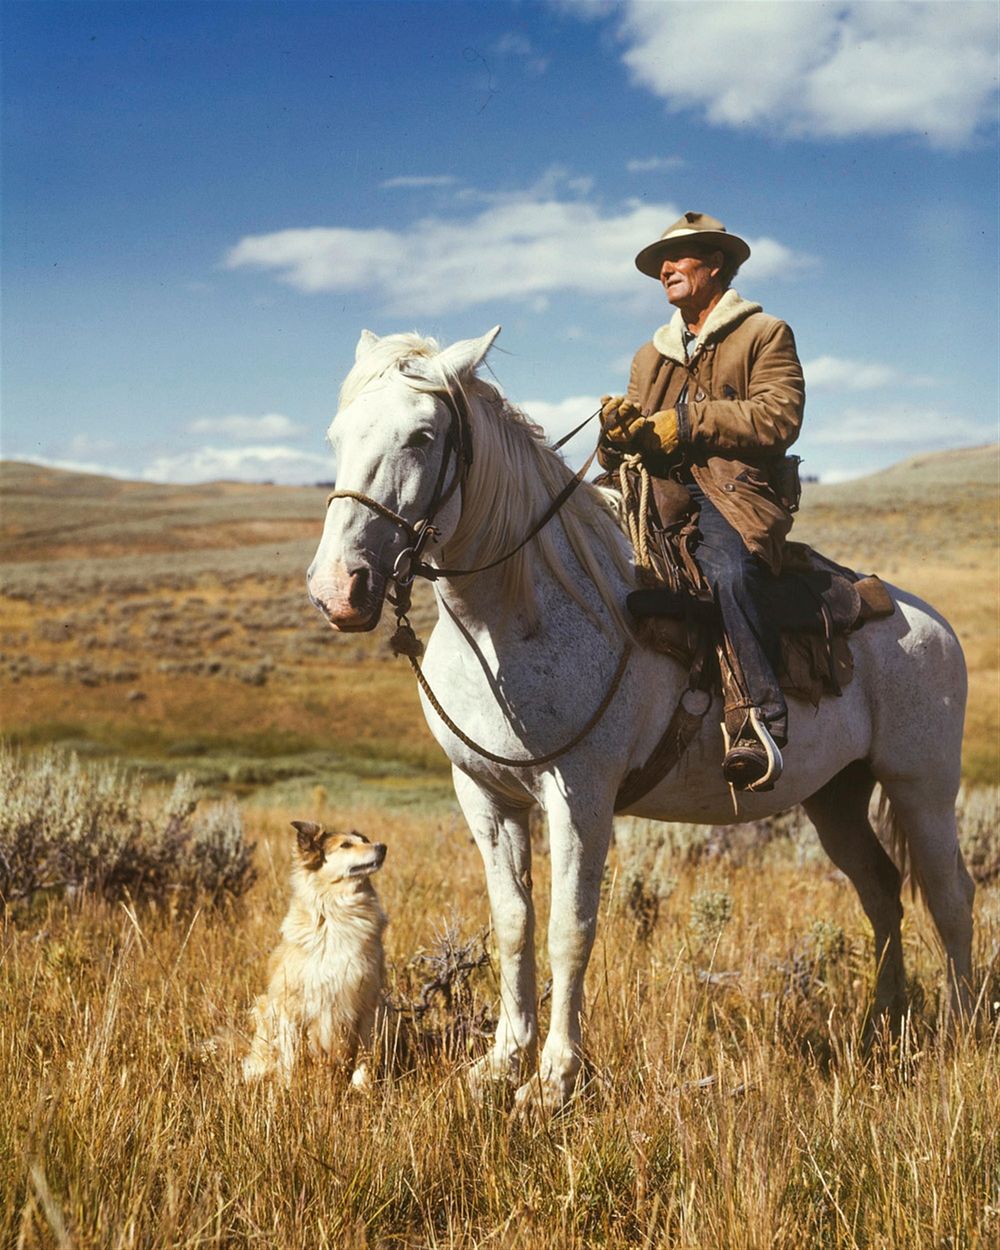 Farmer on horseback, Location unknown, May 11, 2016.